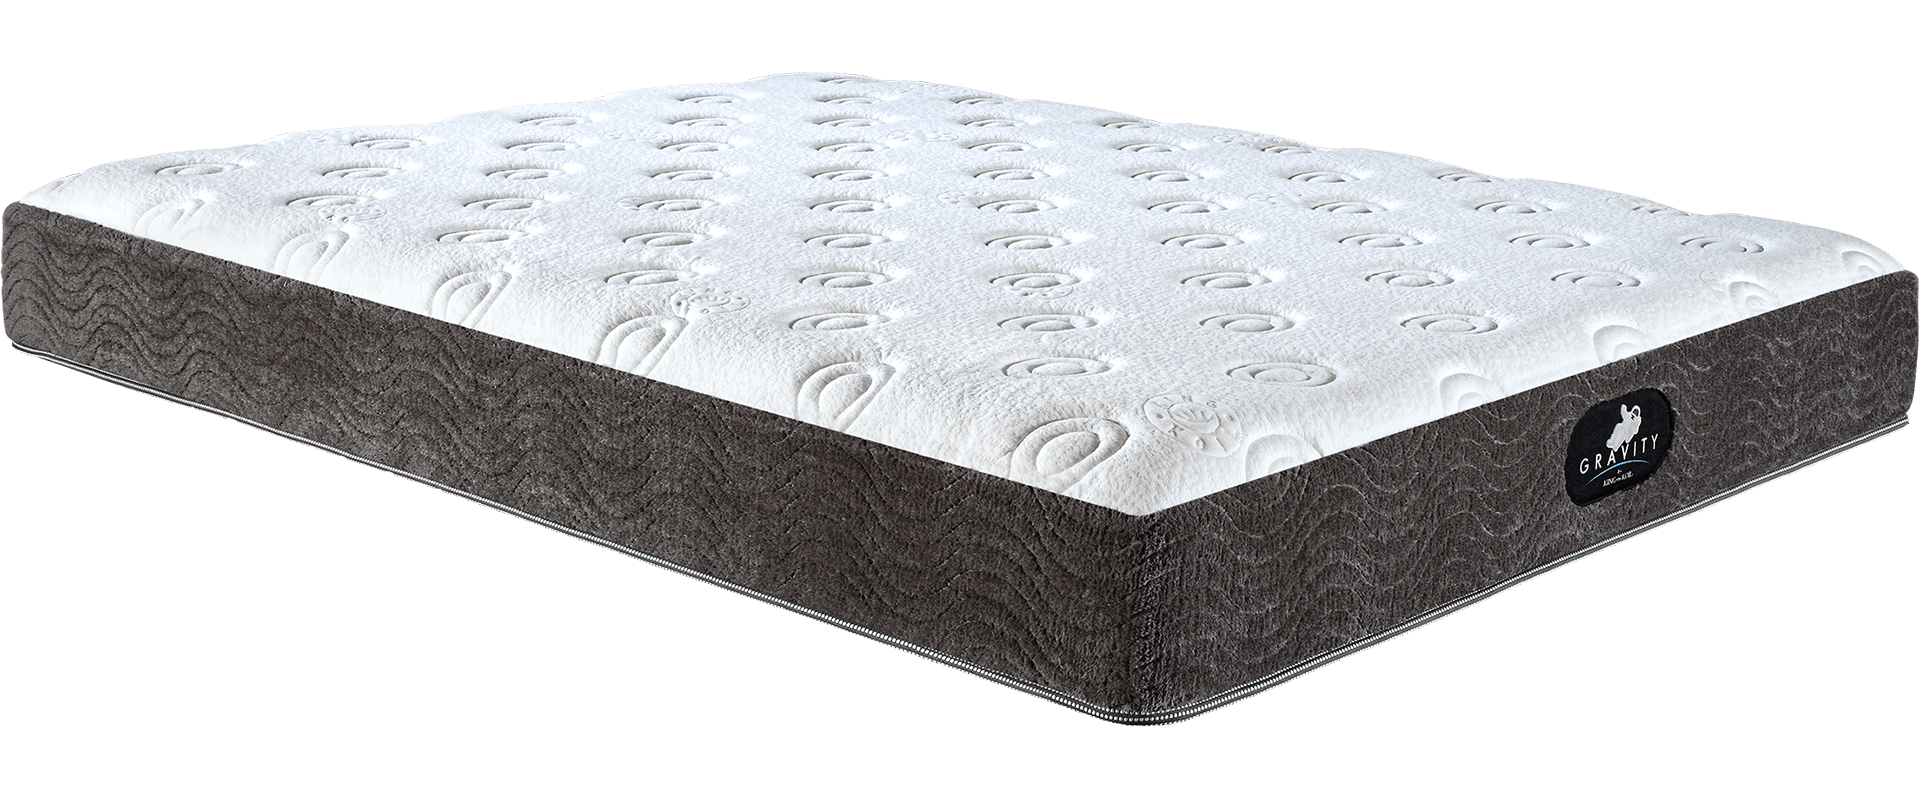 best orthopedic memory foam mattress india